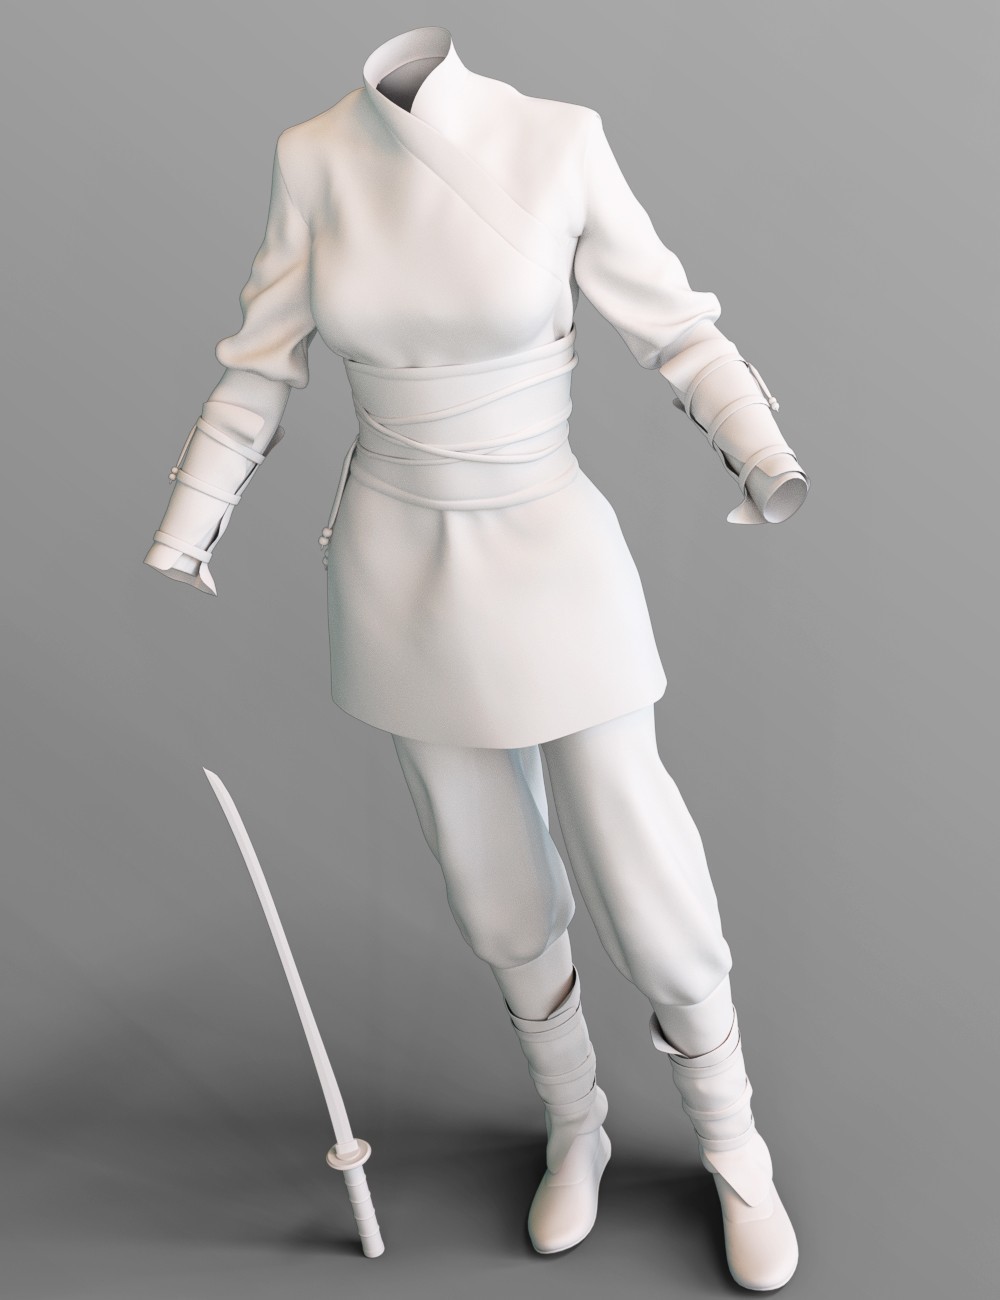 ArtStation - Water Spirit Warrior Outfit for Genesis 3 Female